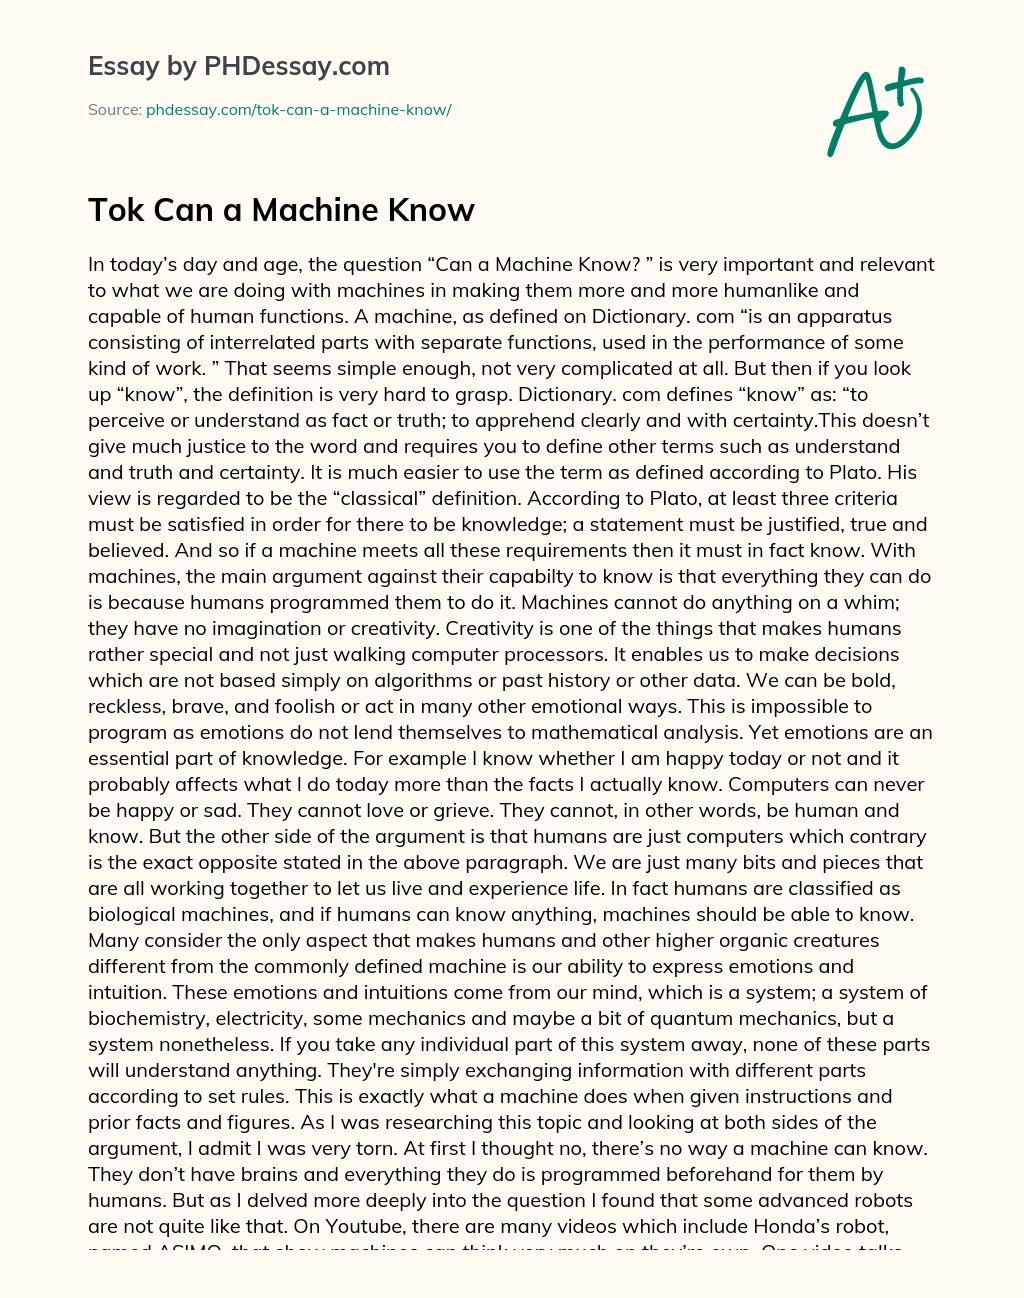 Tok Can a Machine Know essay